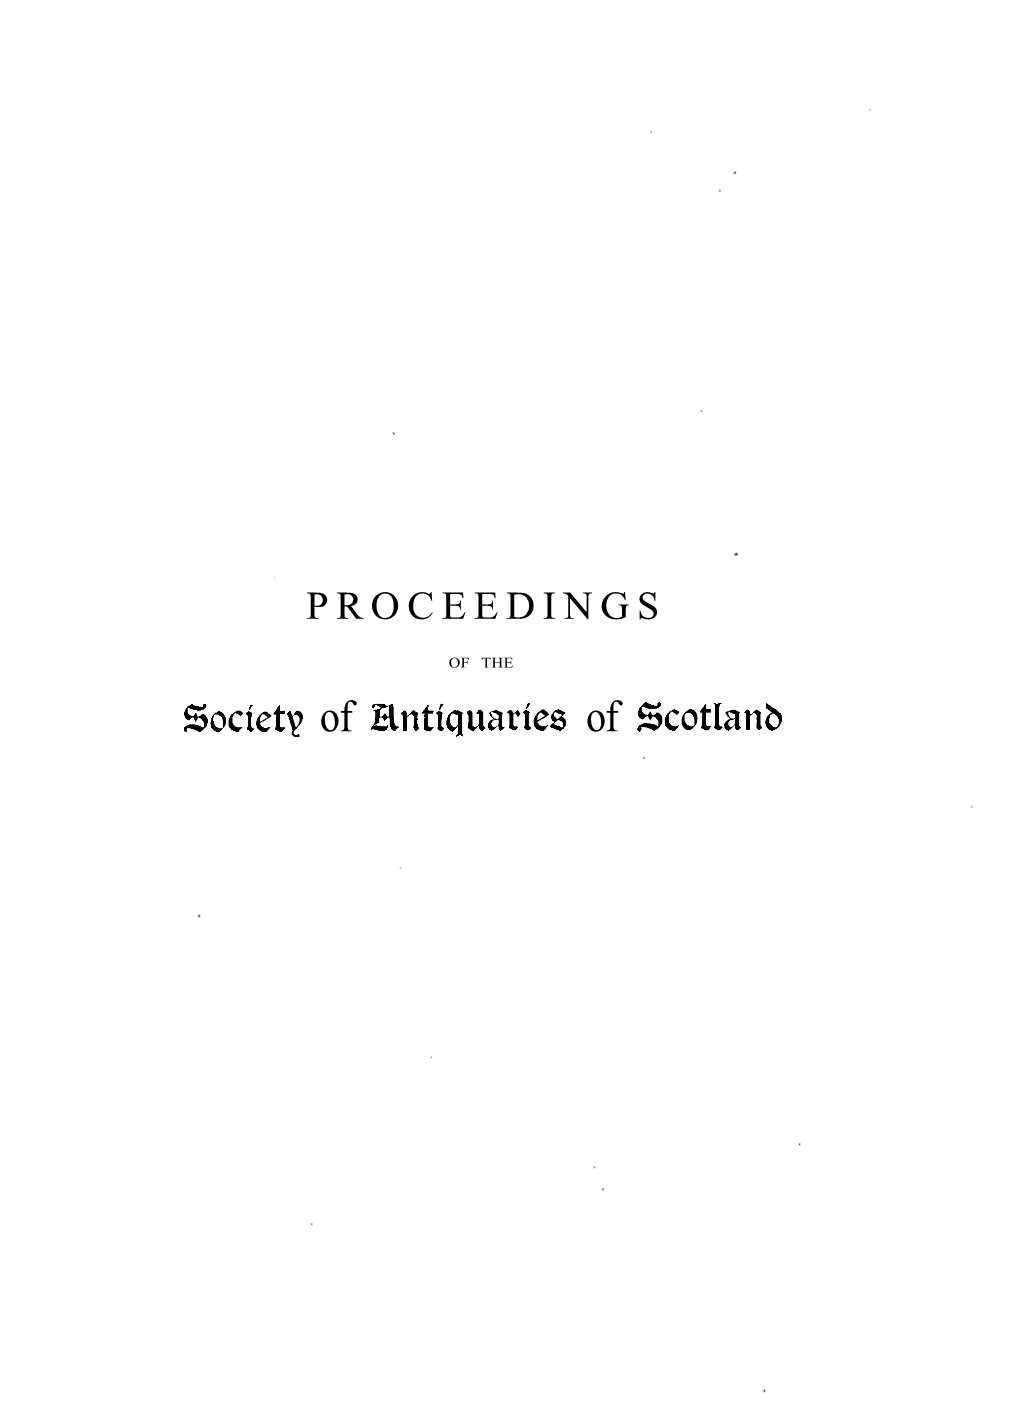 Society of Bntiquaries of Scotlanb PROCEEDINGS